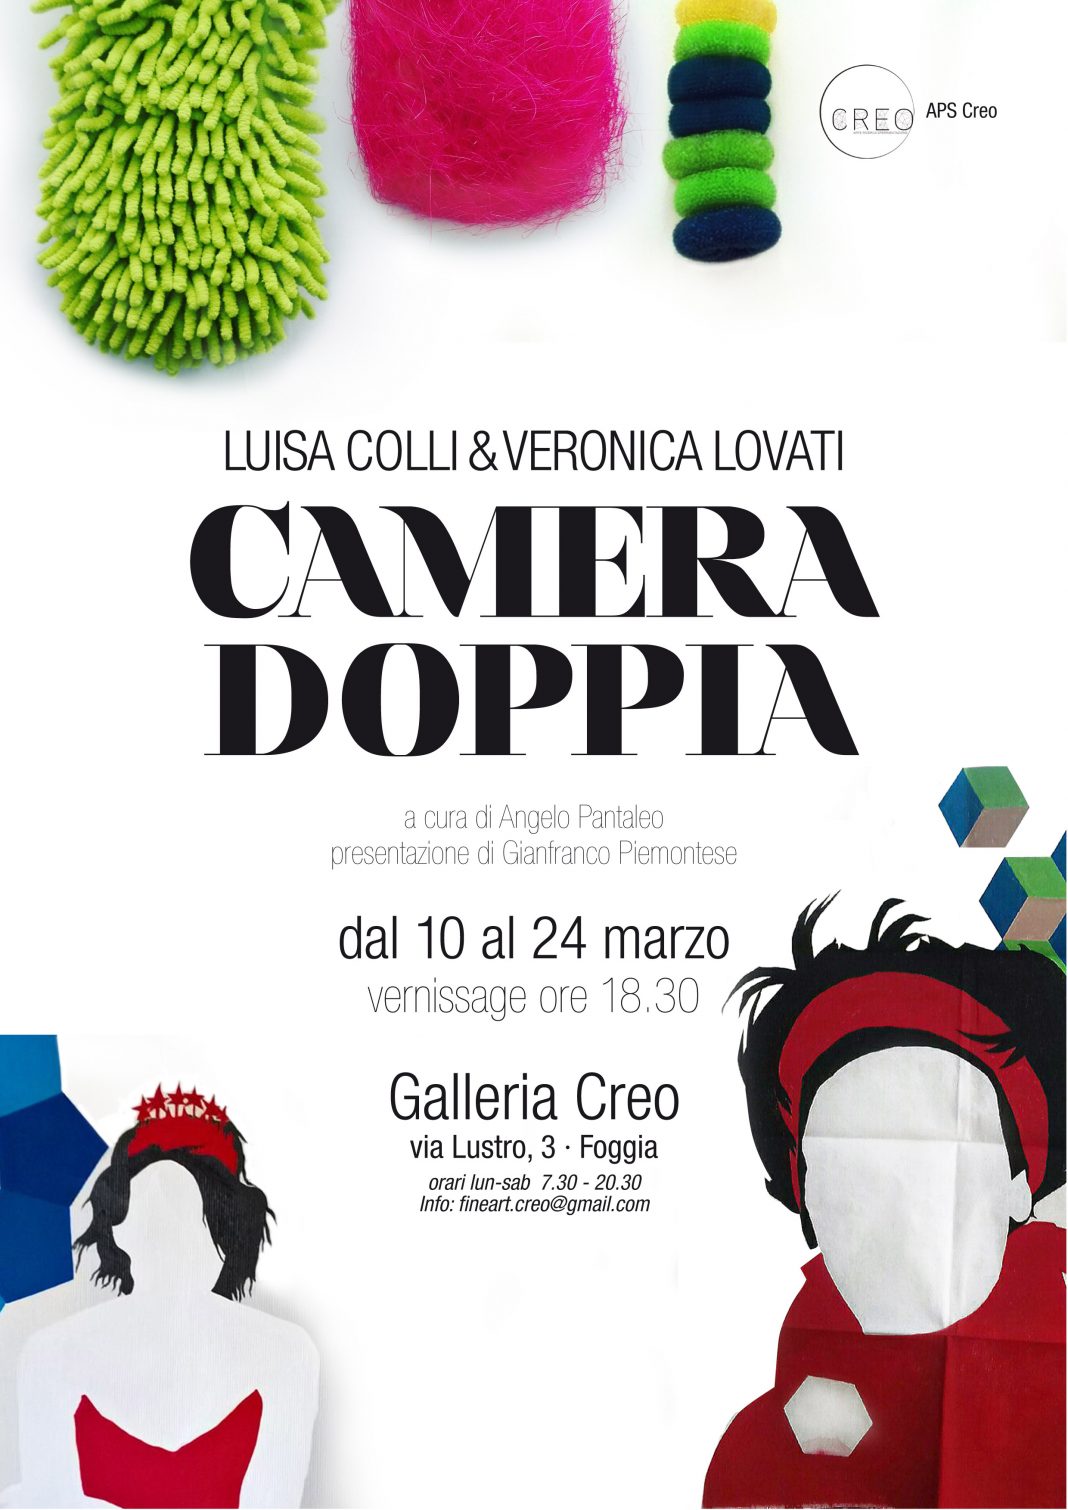 Luisa Colli / Veronica Lovati – Camera doppiahttps://www.exibart.com/repository/media/eventi/2018/03/luisa-colli-veronica-lovati-8211-camera-doppia-1068x1510.jpg